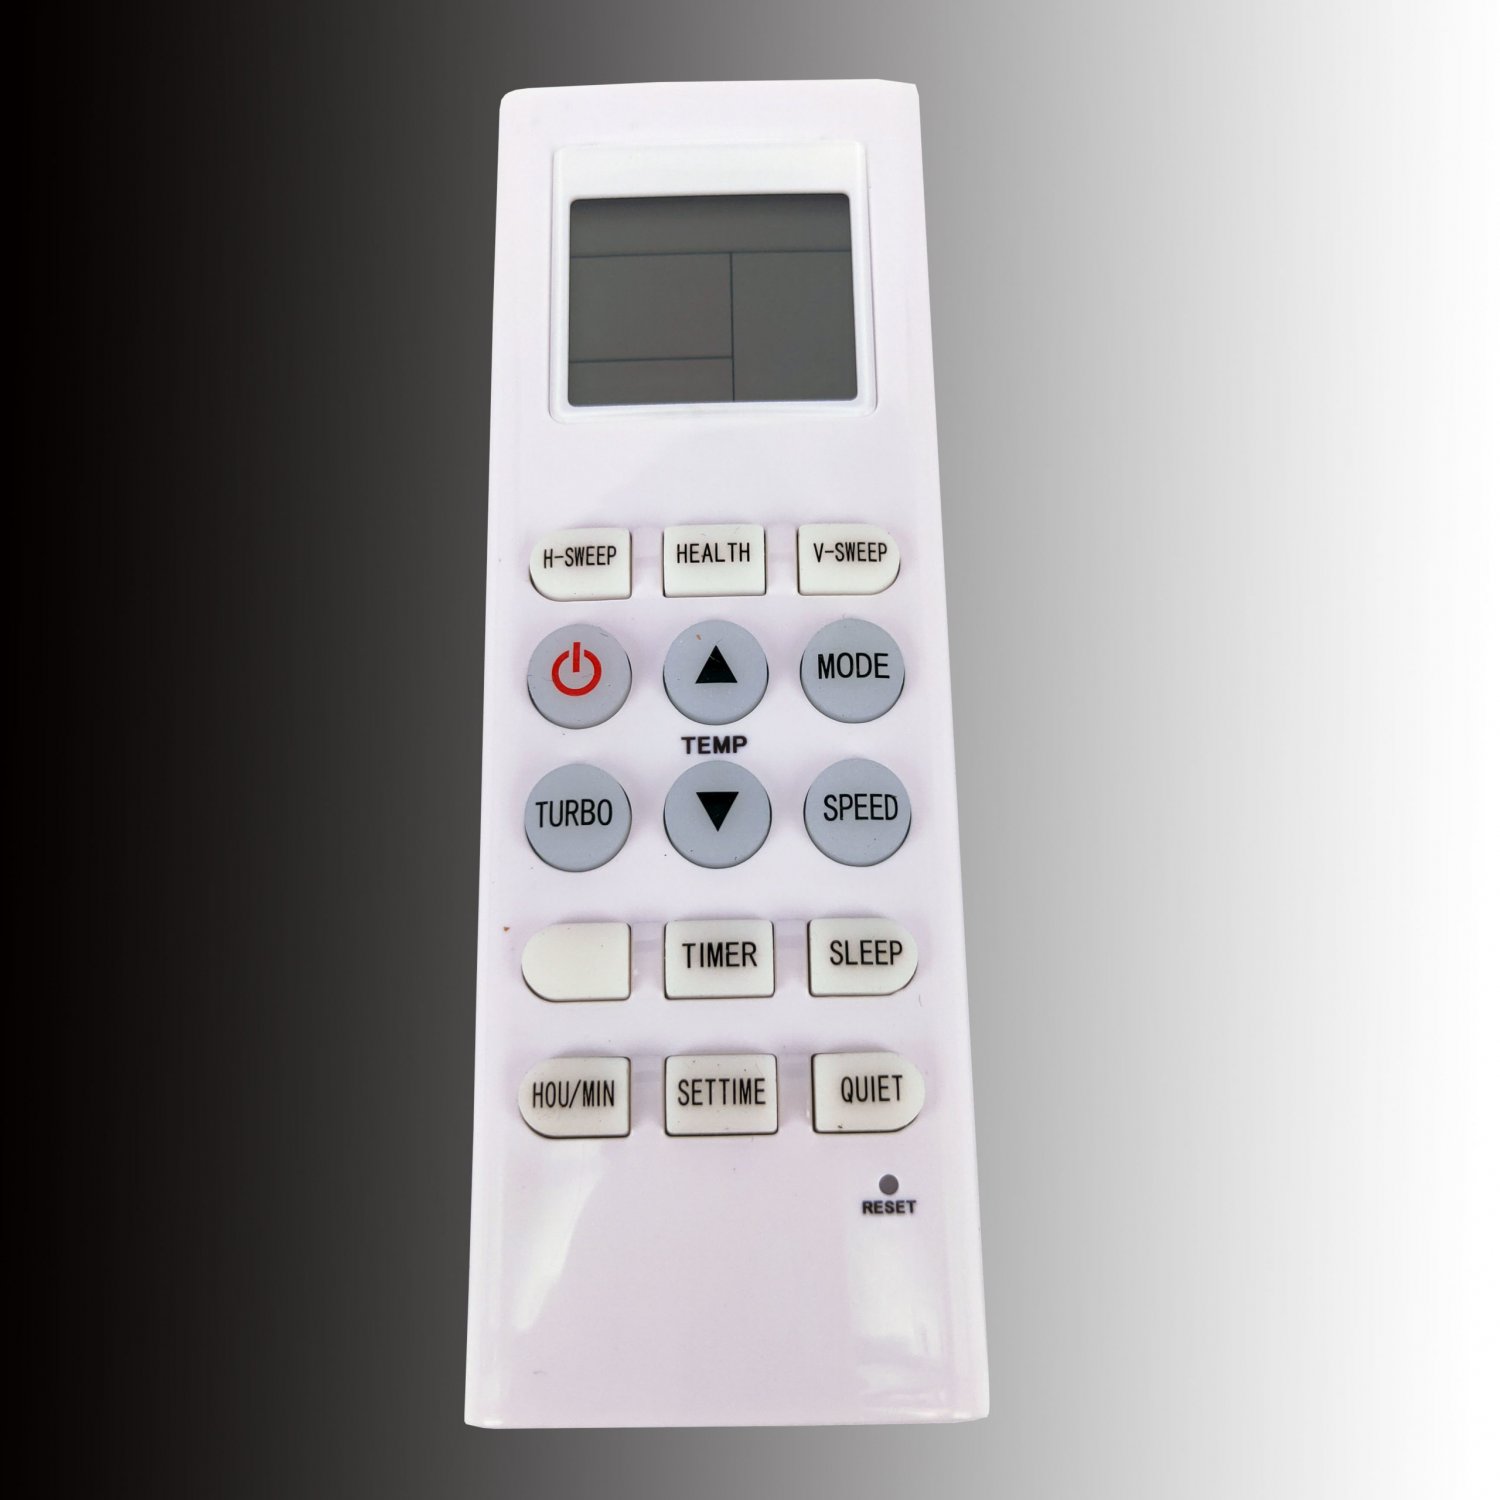 KKG7B-C1 Original Remote Control For Changhong Air Conditioner